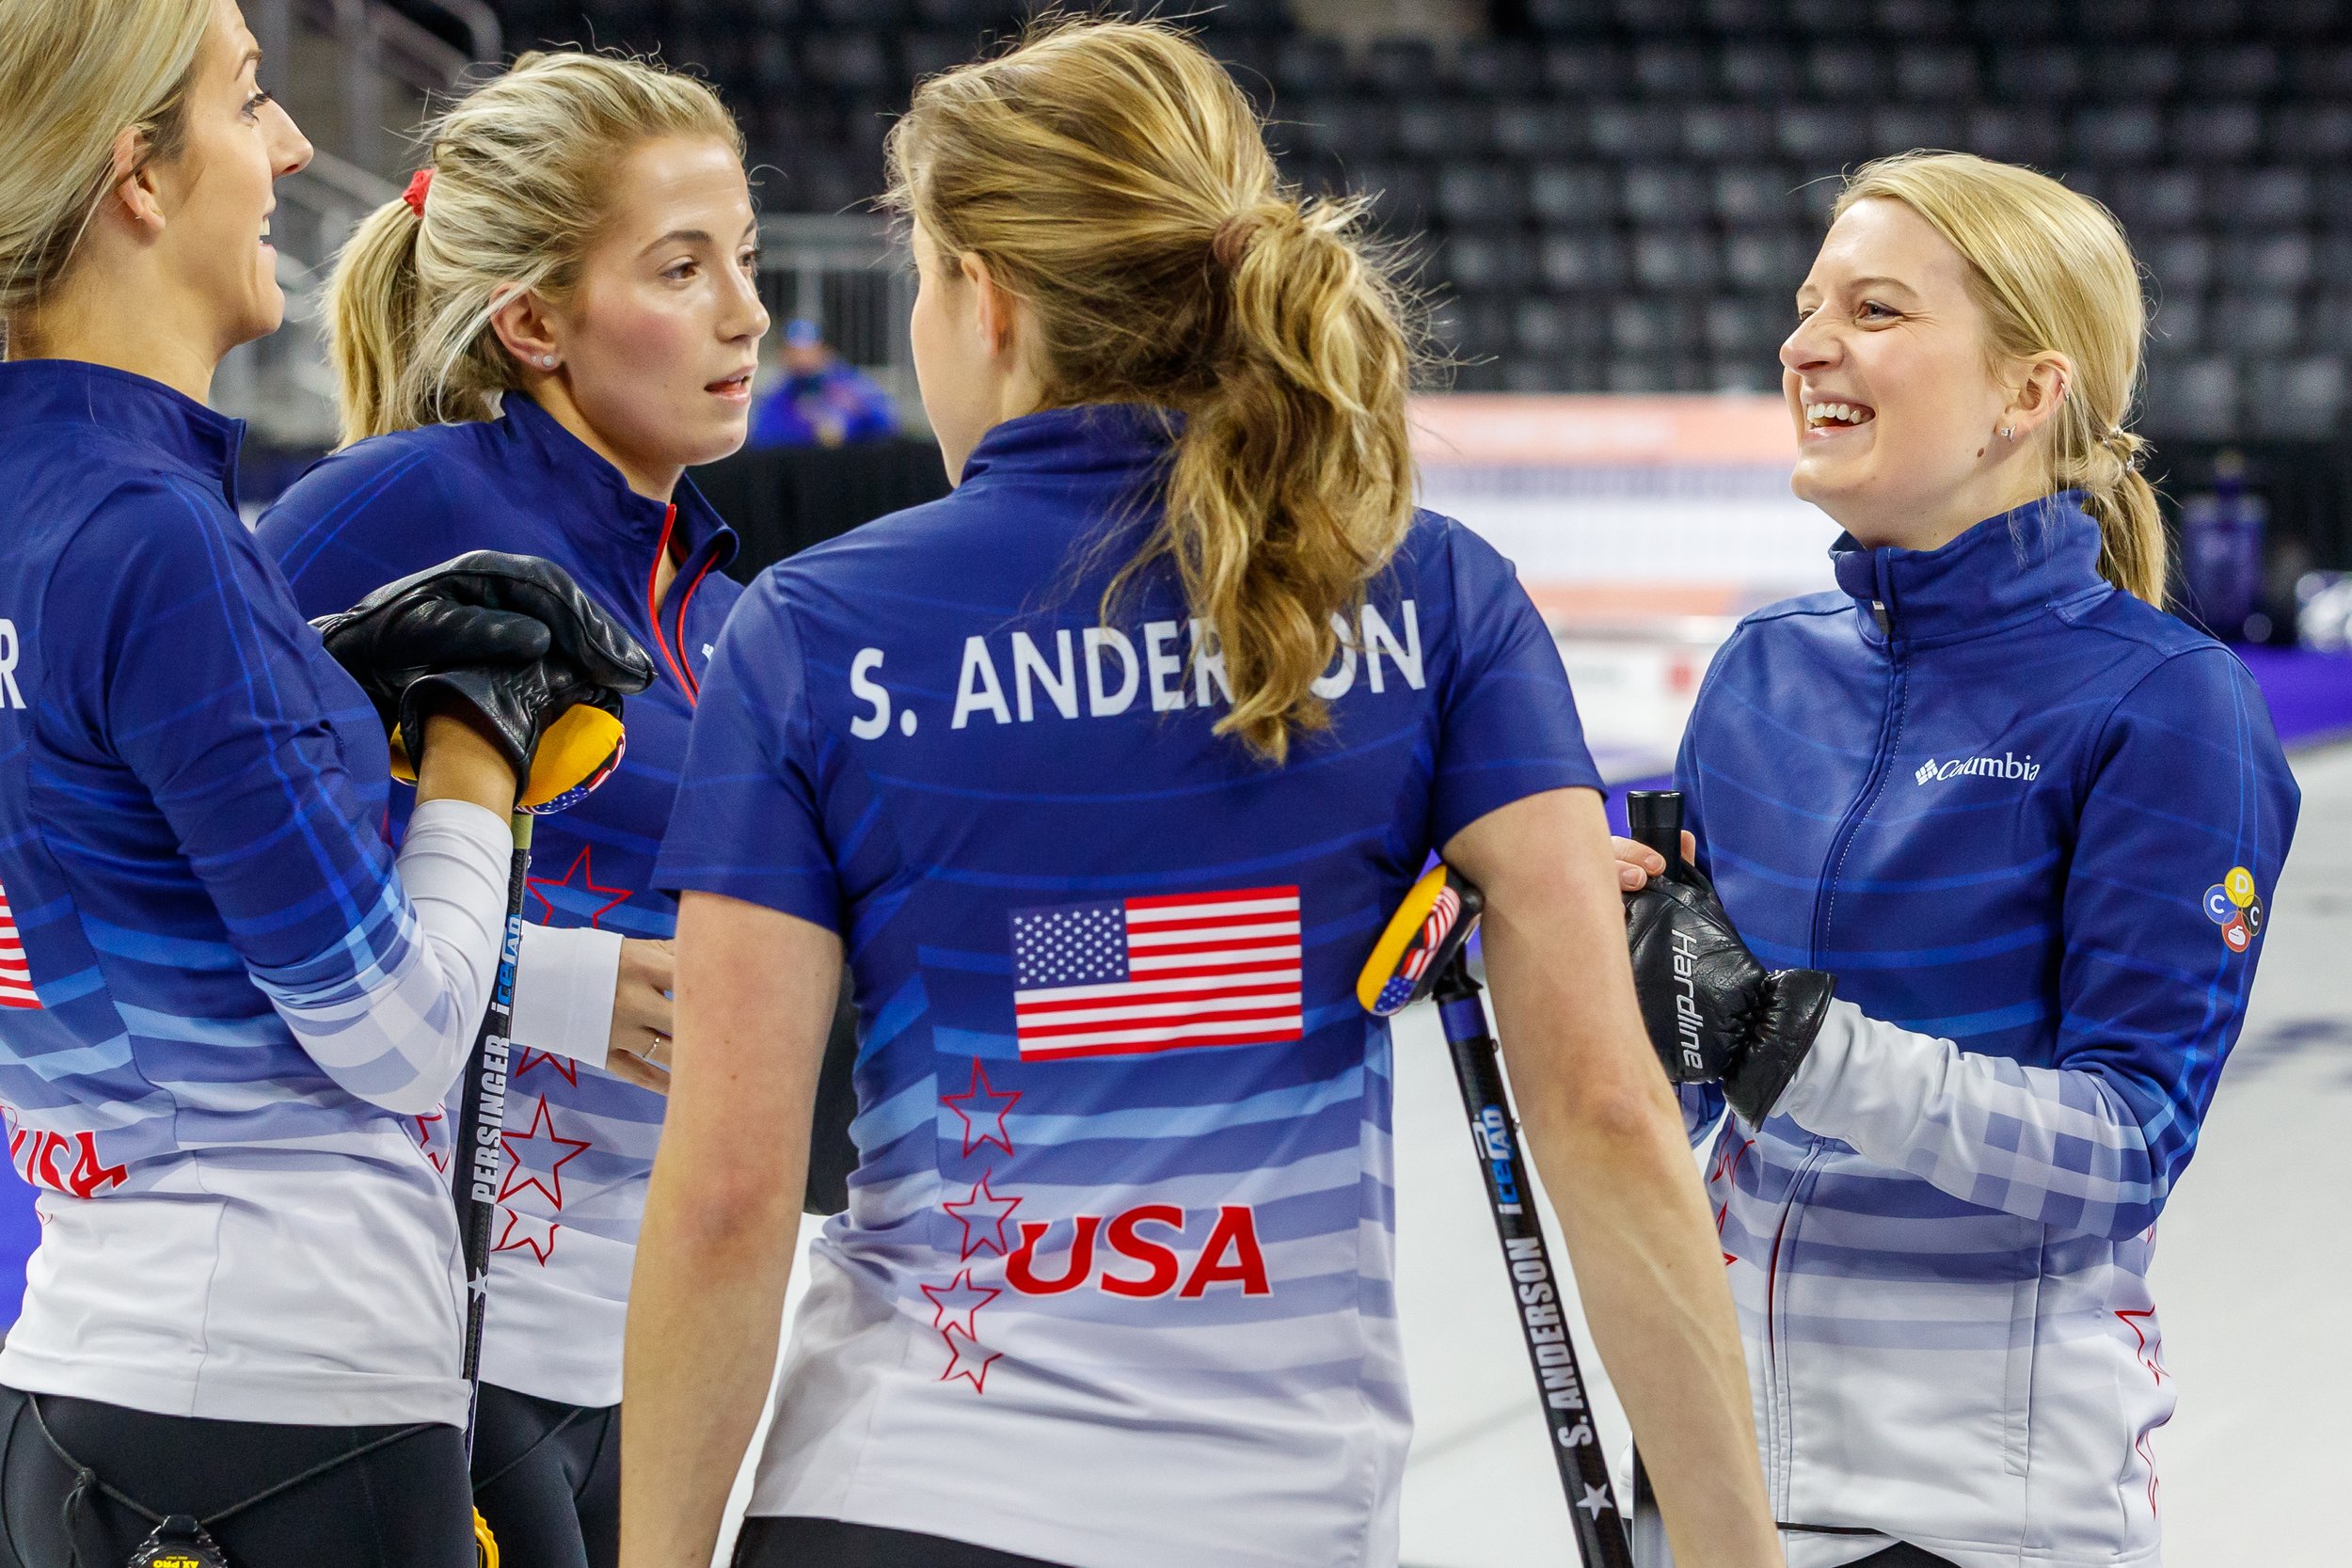 womens world curling 2022 live